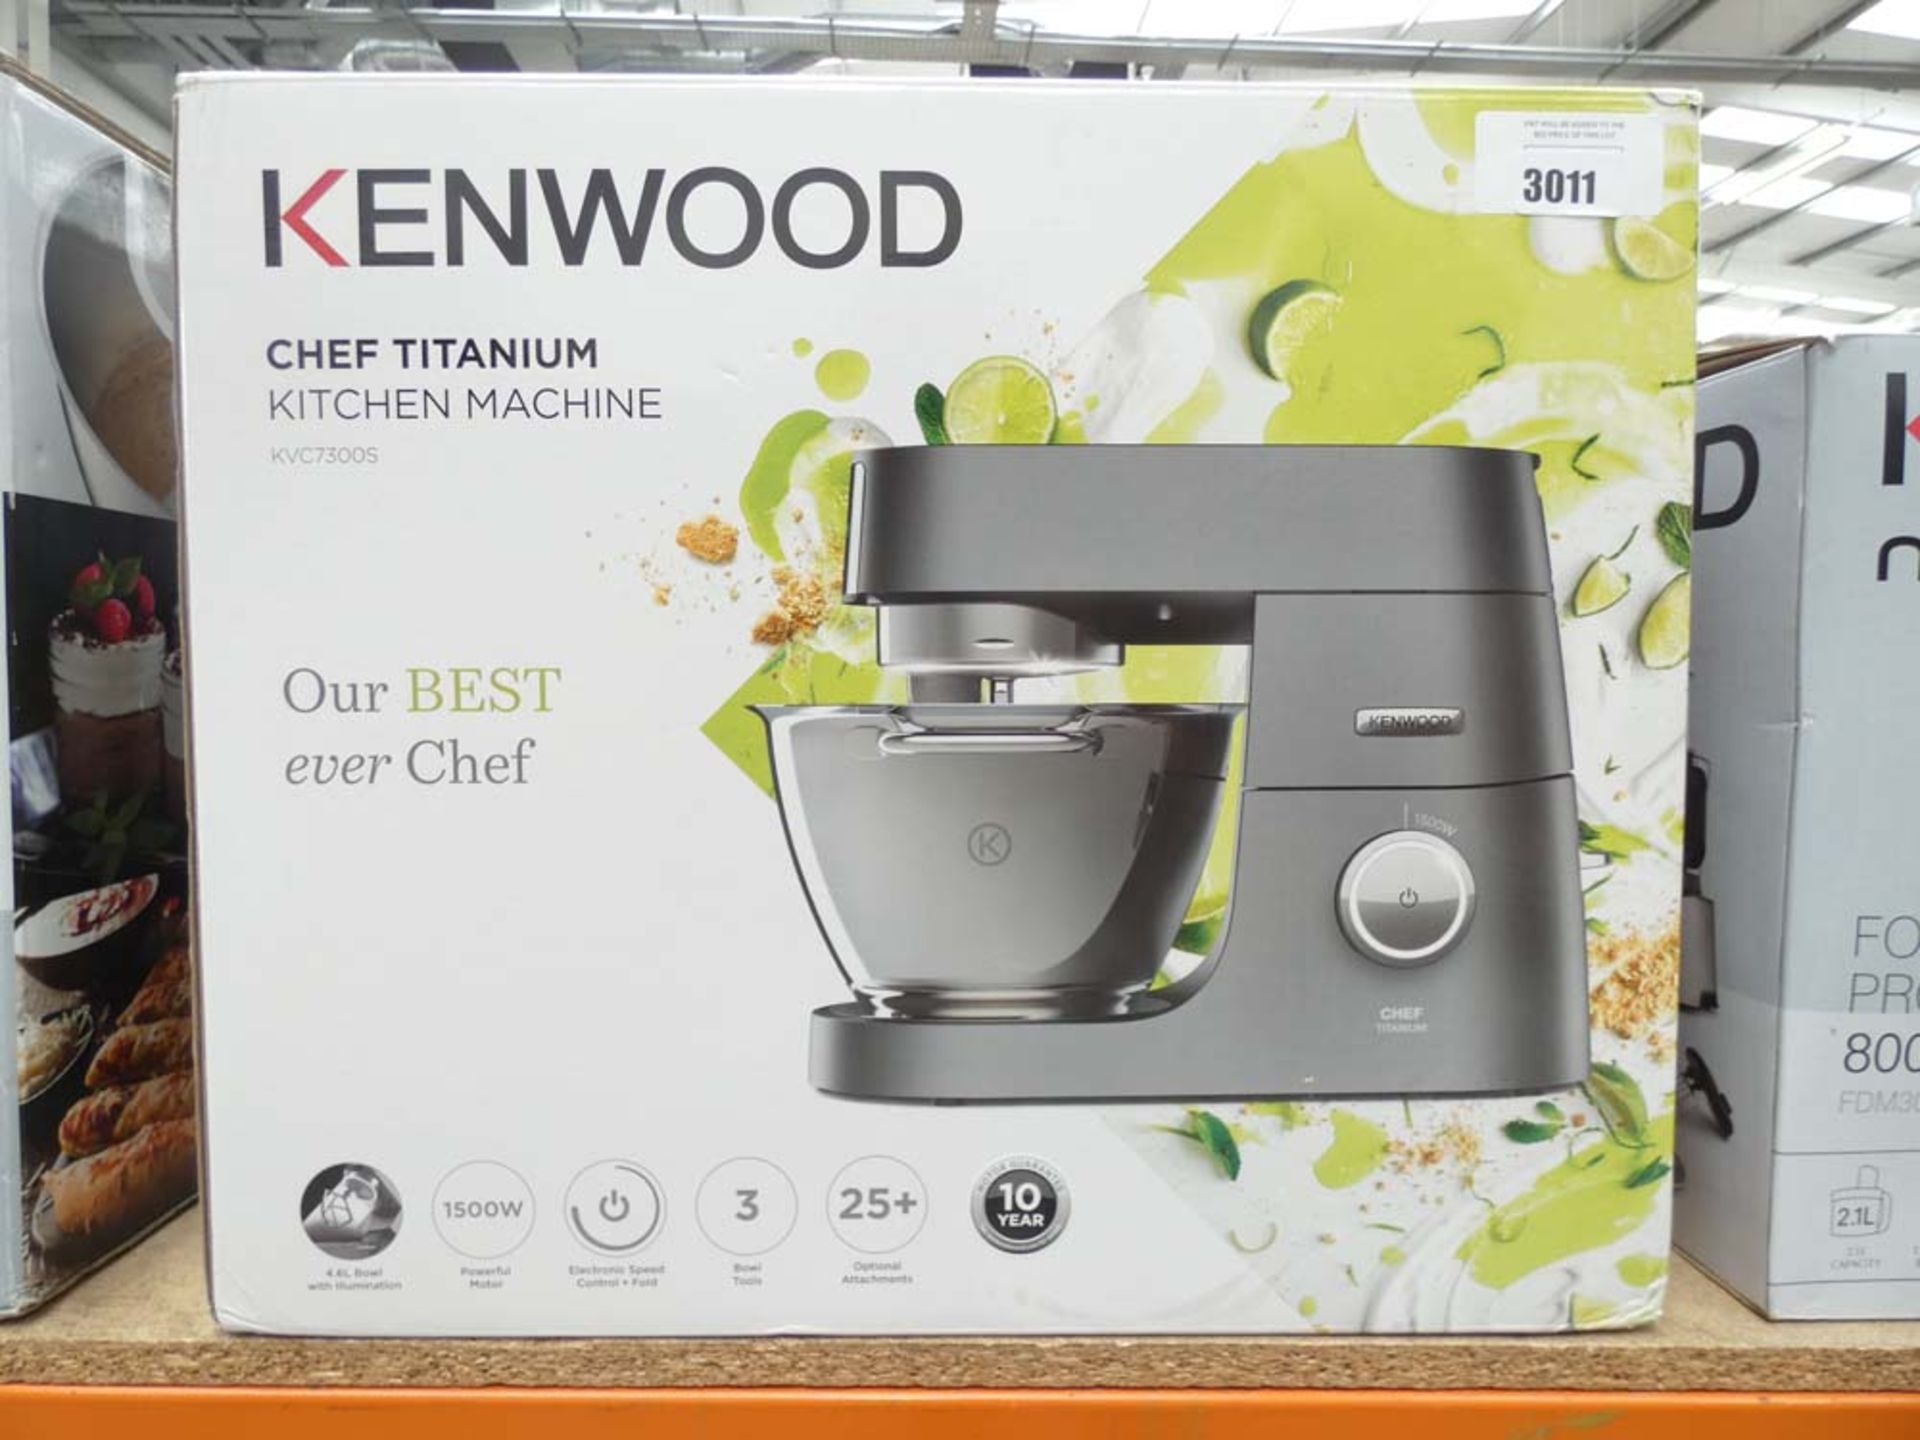 (102) Boxed Kenwood chef titanium kitchen machine